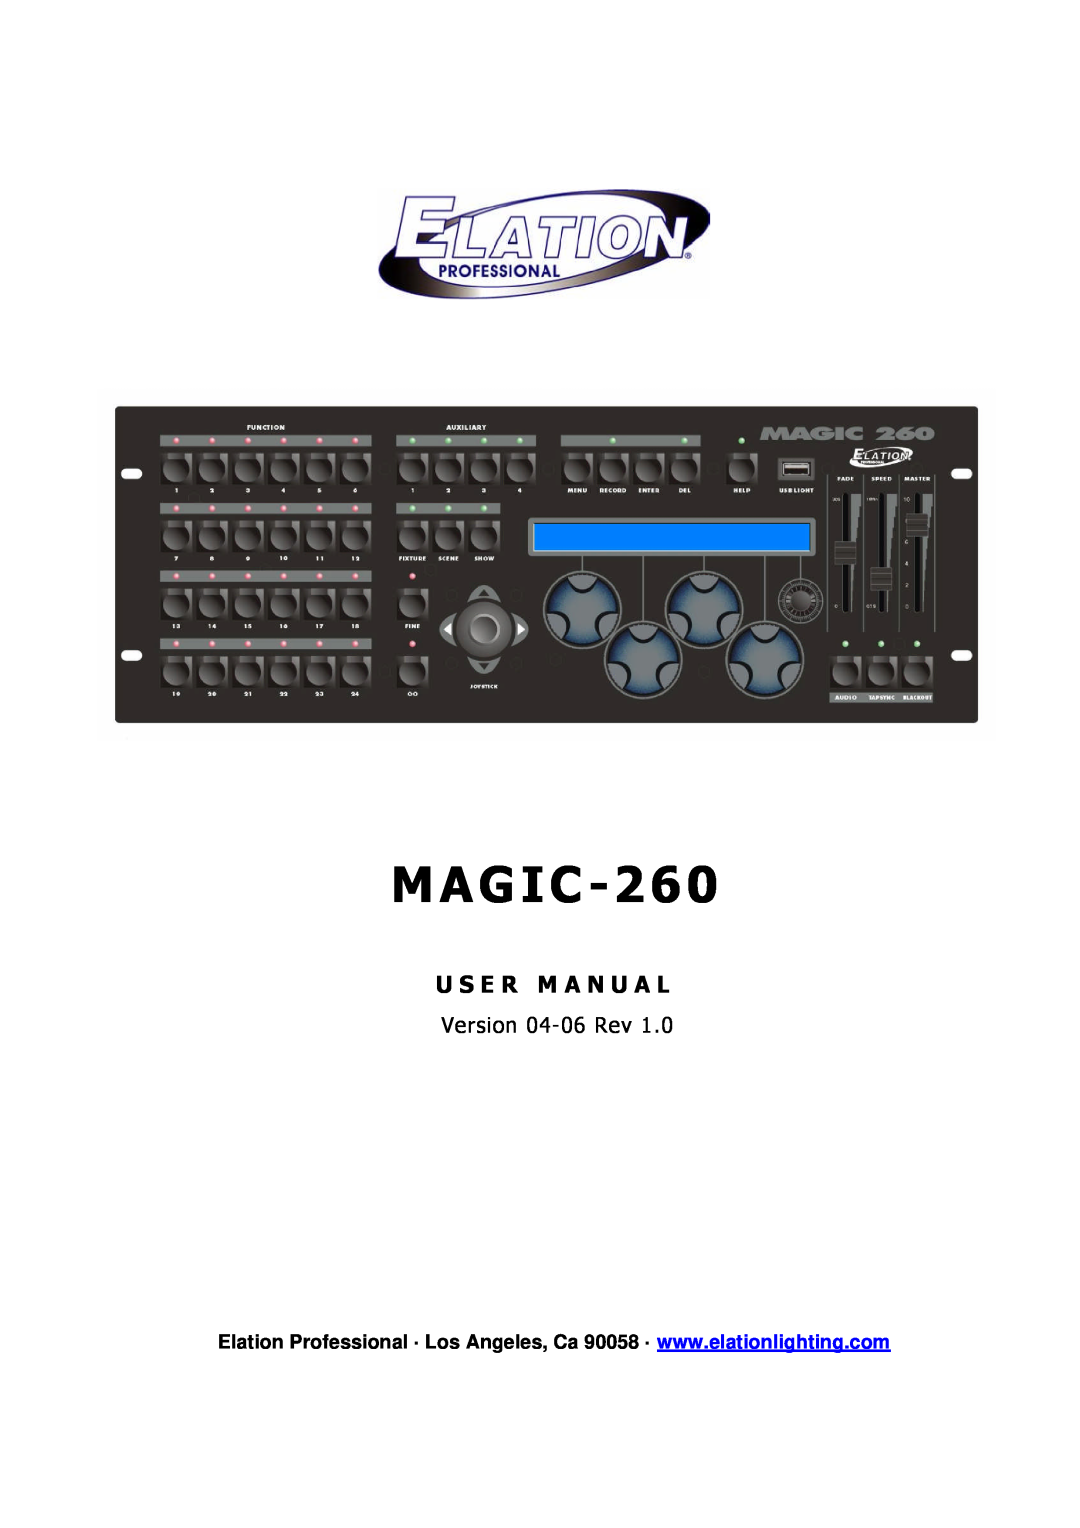 Elation Professional MAGIC-260 user manual M Ag I C, U S E R M A N U A L, Version 04-06Rev 